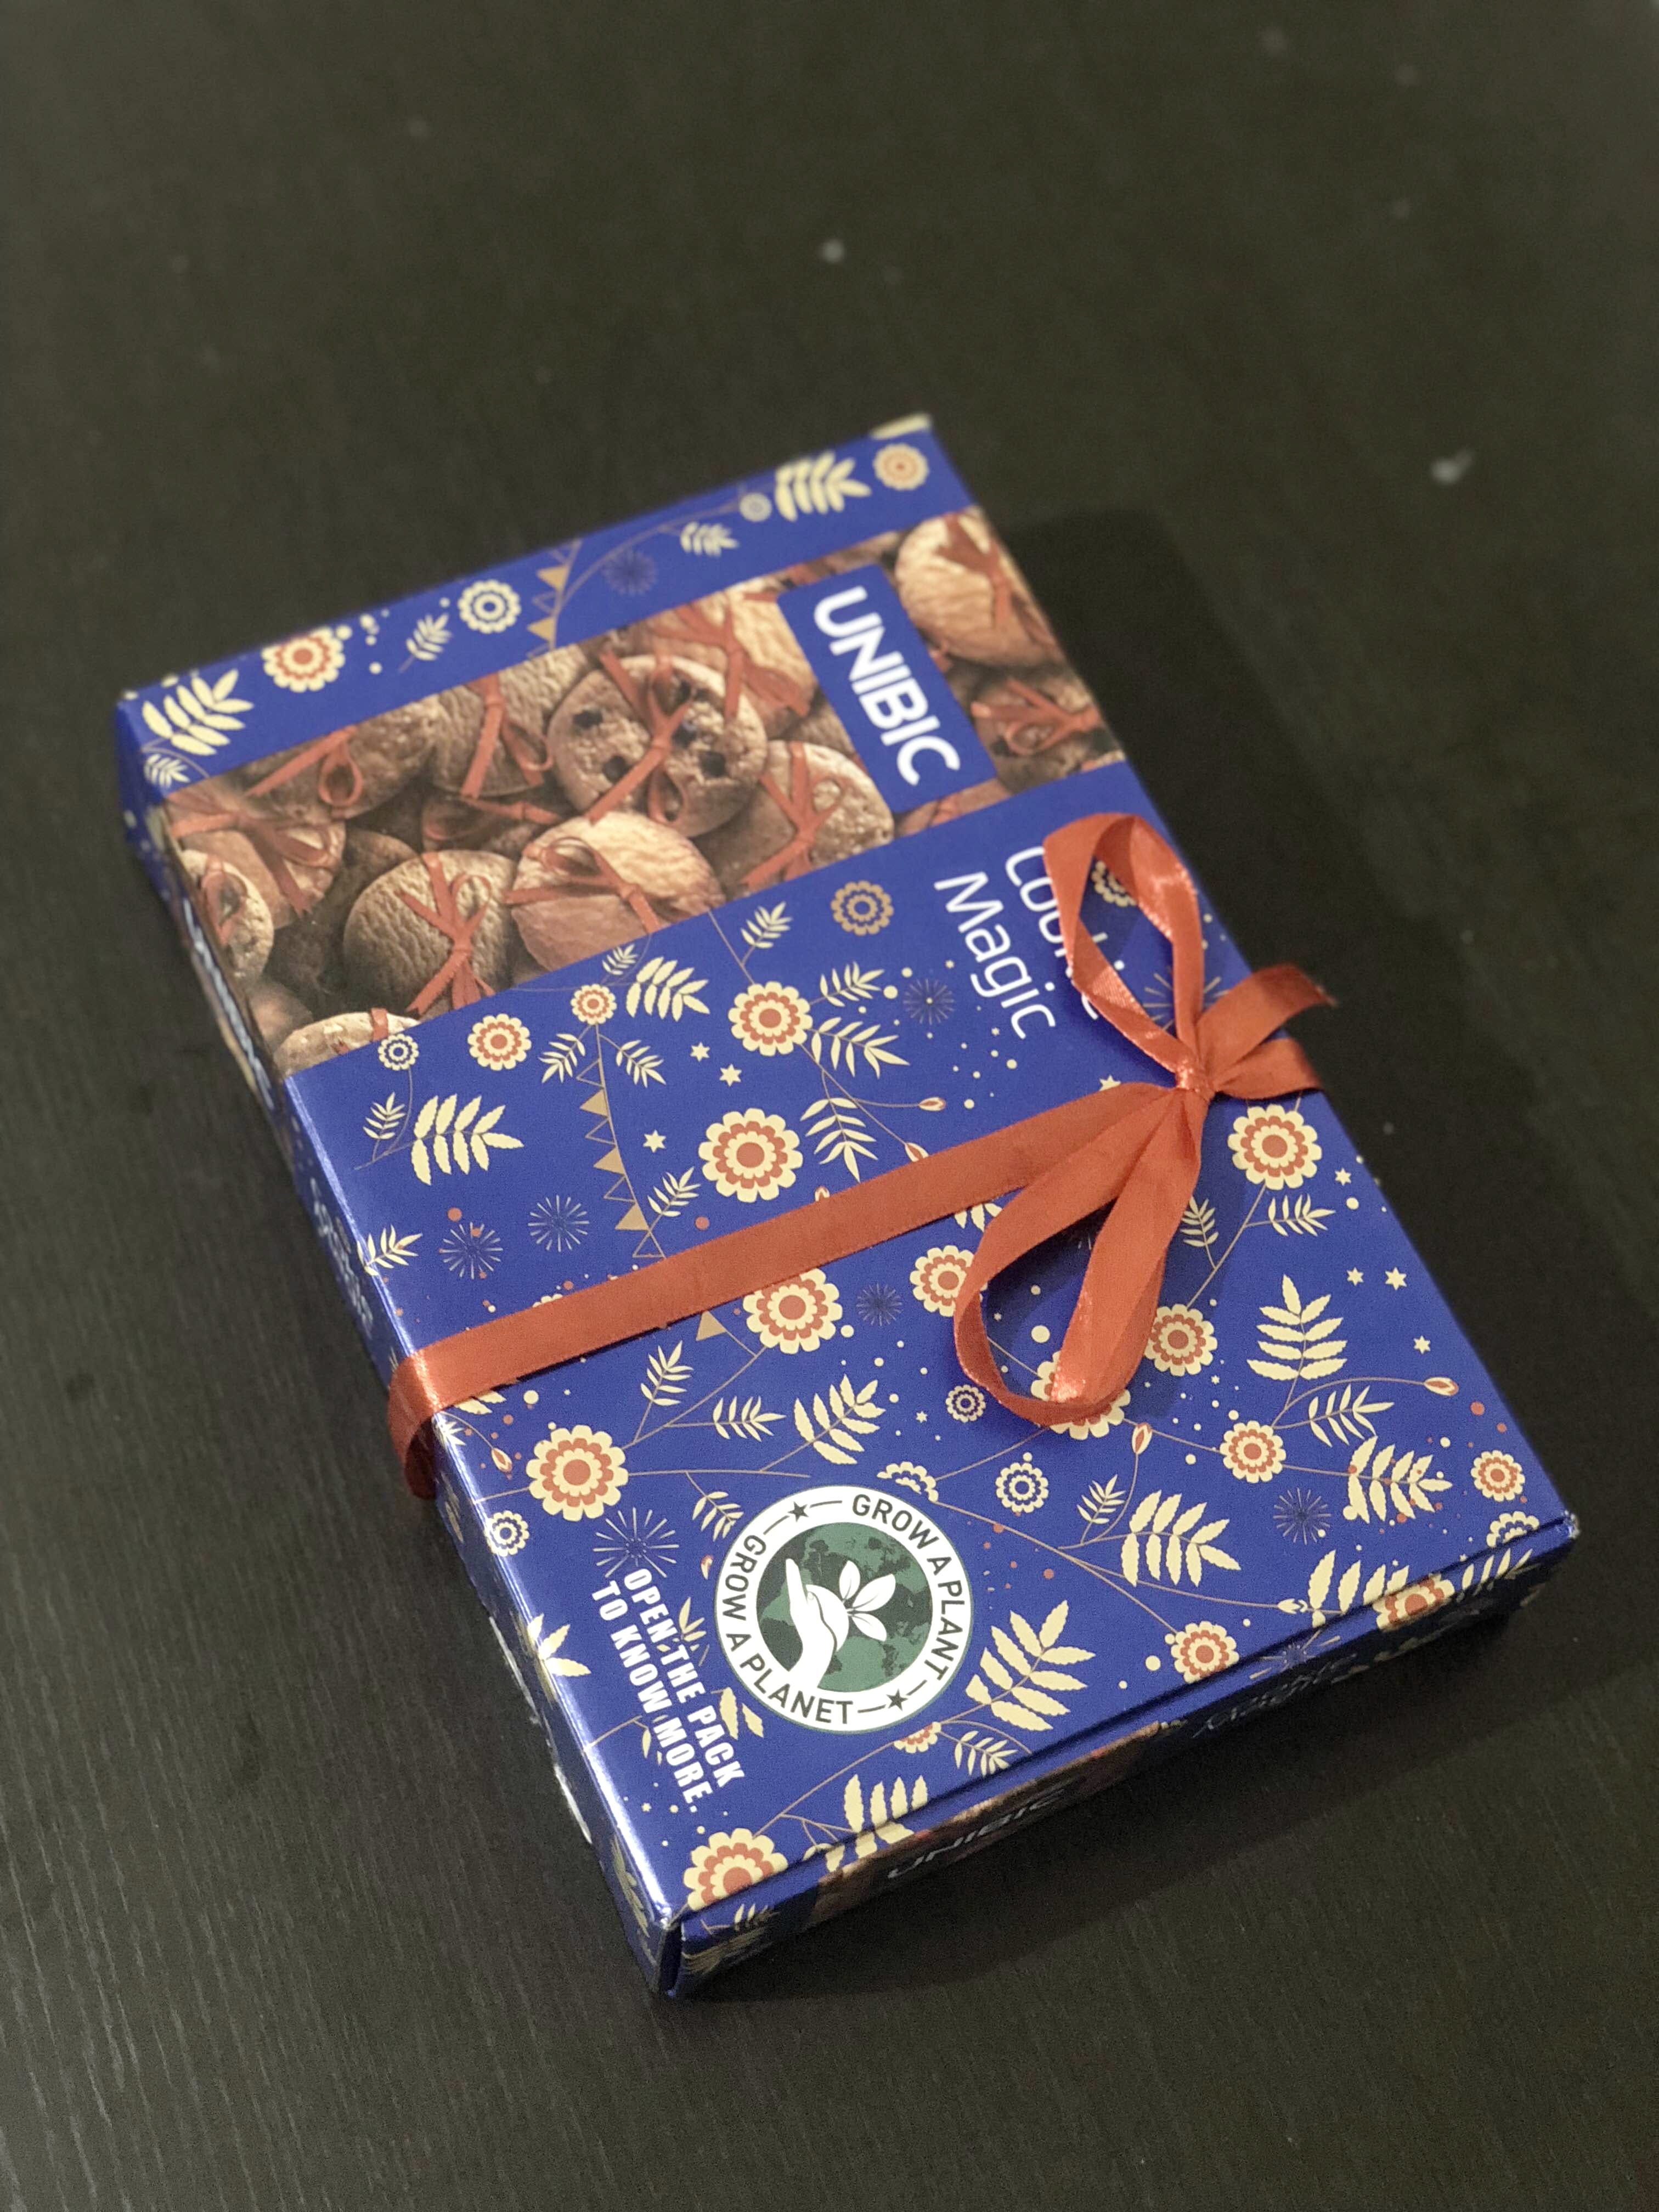 Britannia Shubhkamnaye Meetha Namkeen Delights Biscuits Gift Pack Price -  Buy Online at ₹120 in India